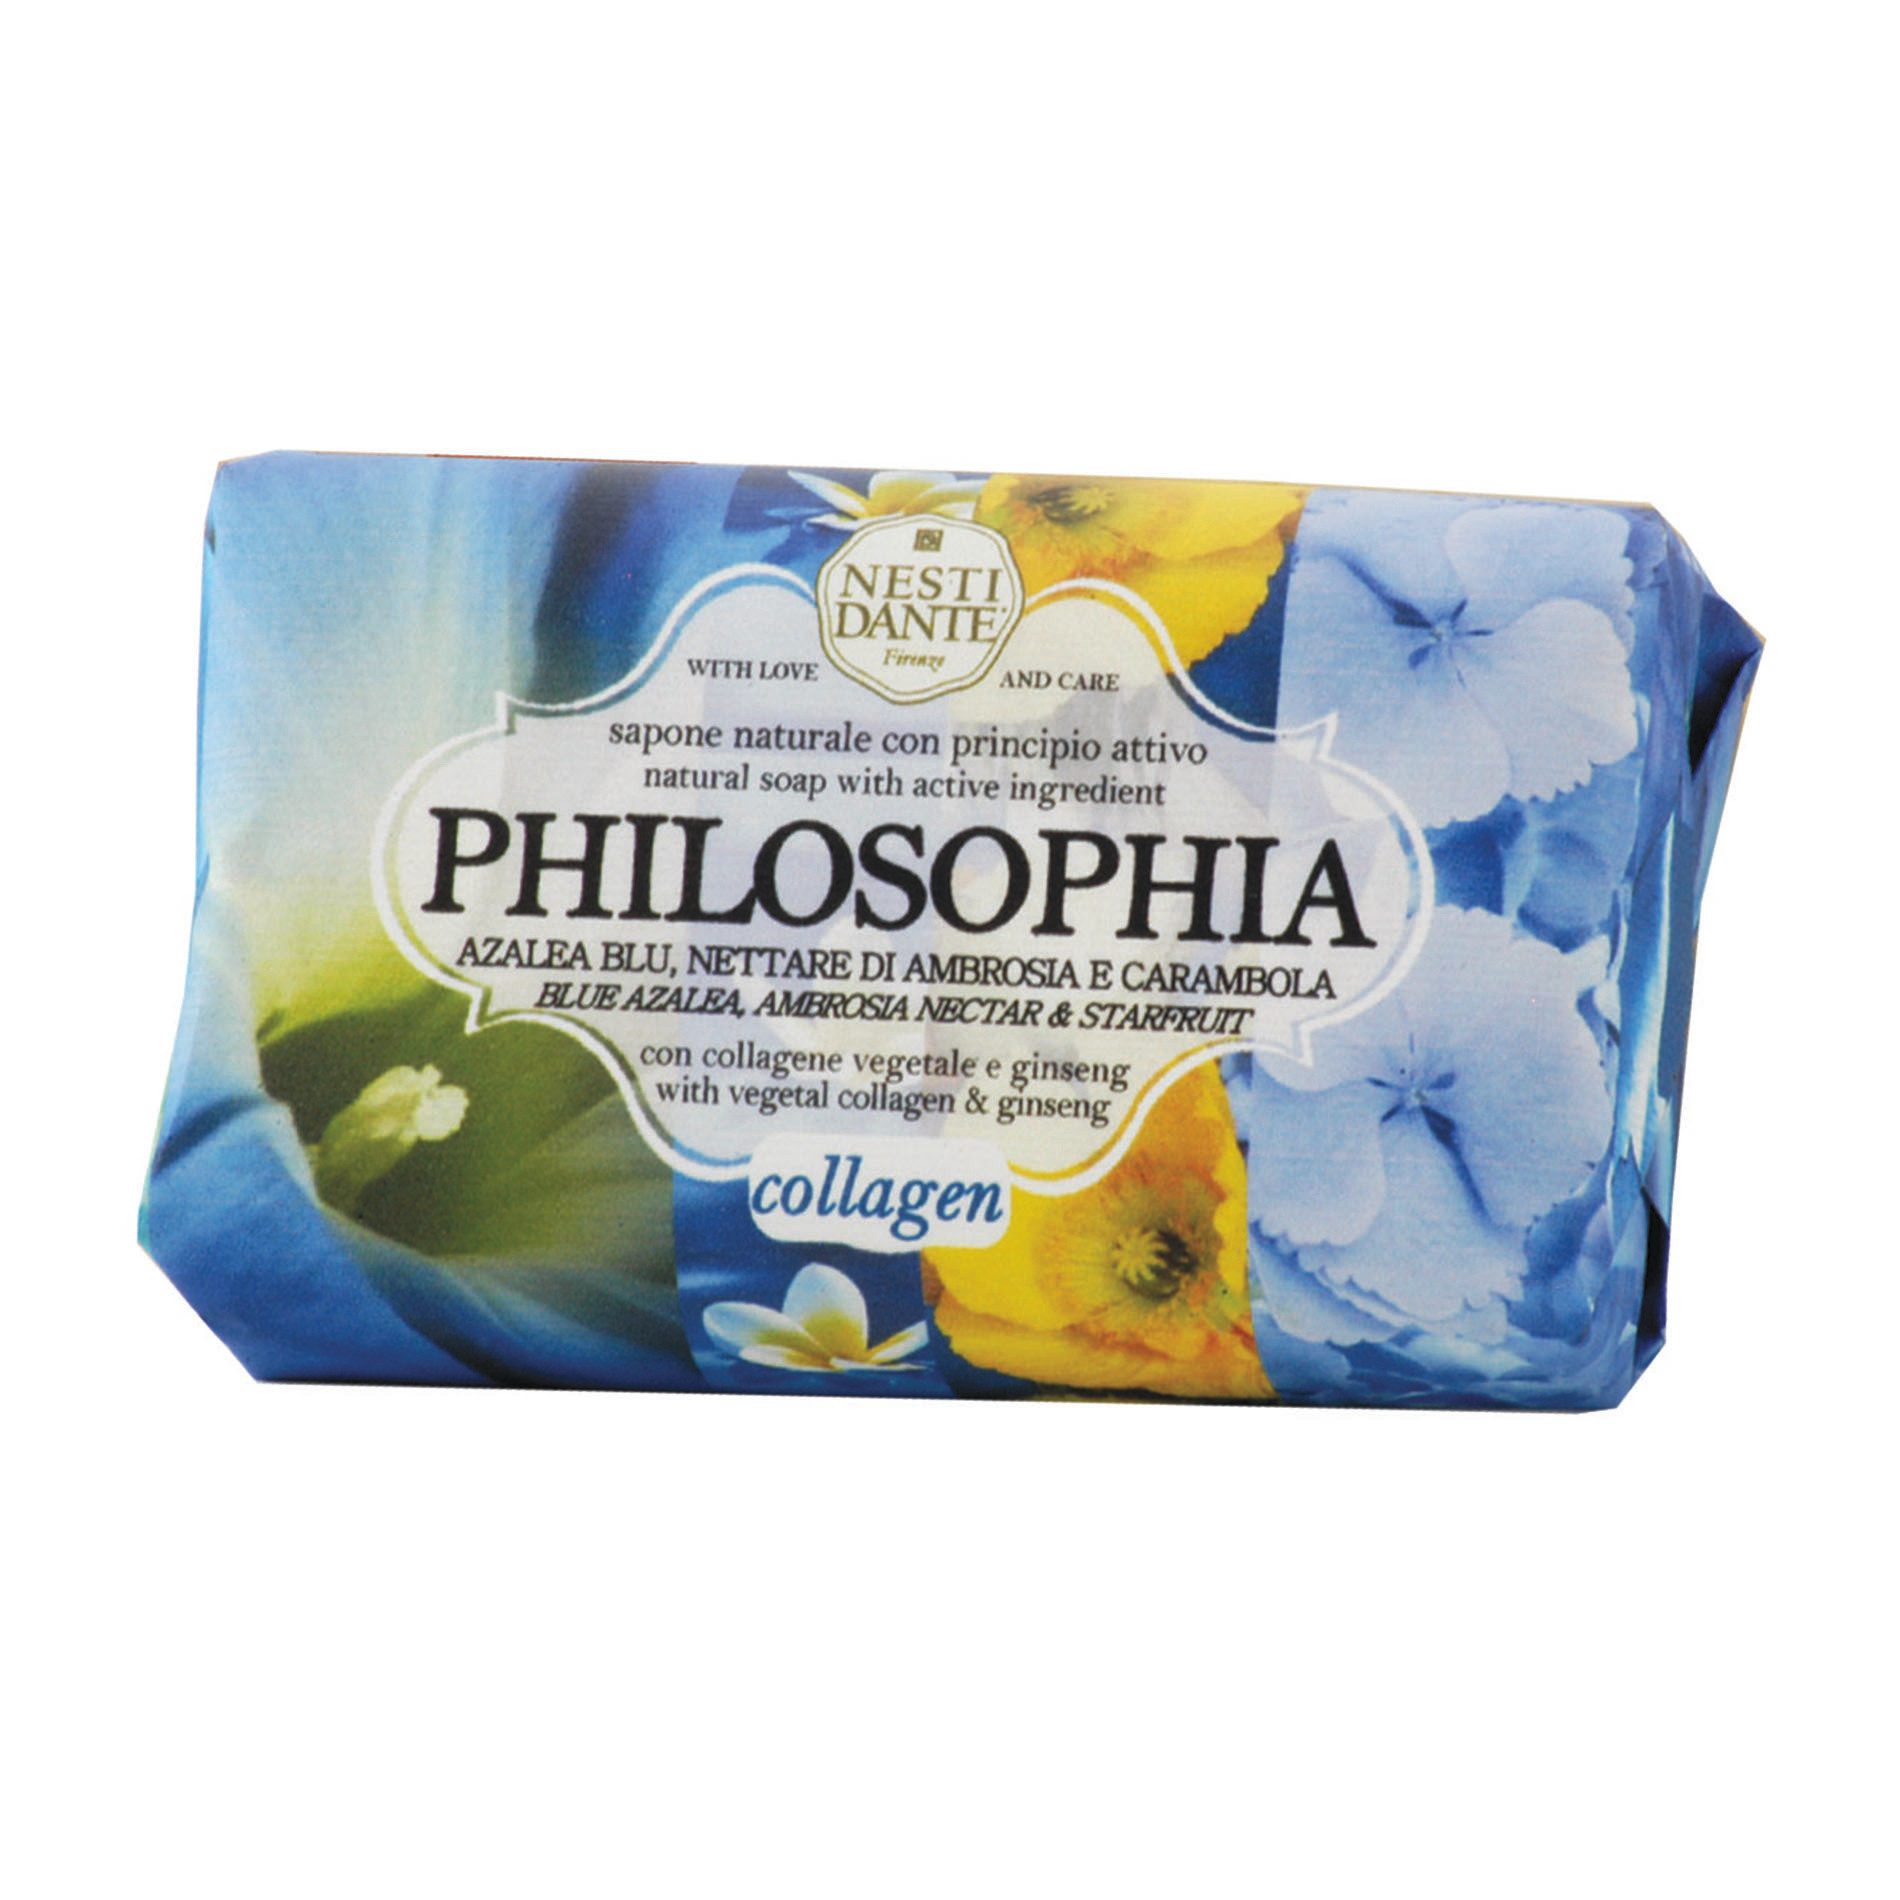 Philosophia - Collagen, Blu, large